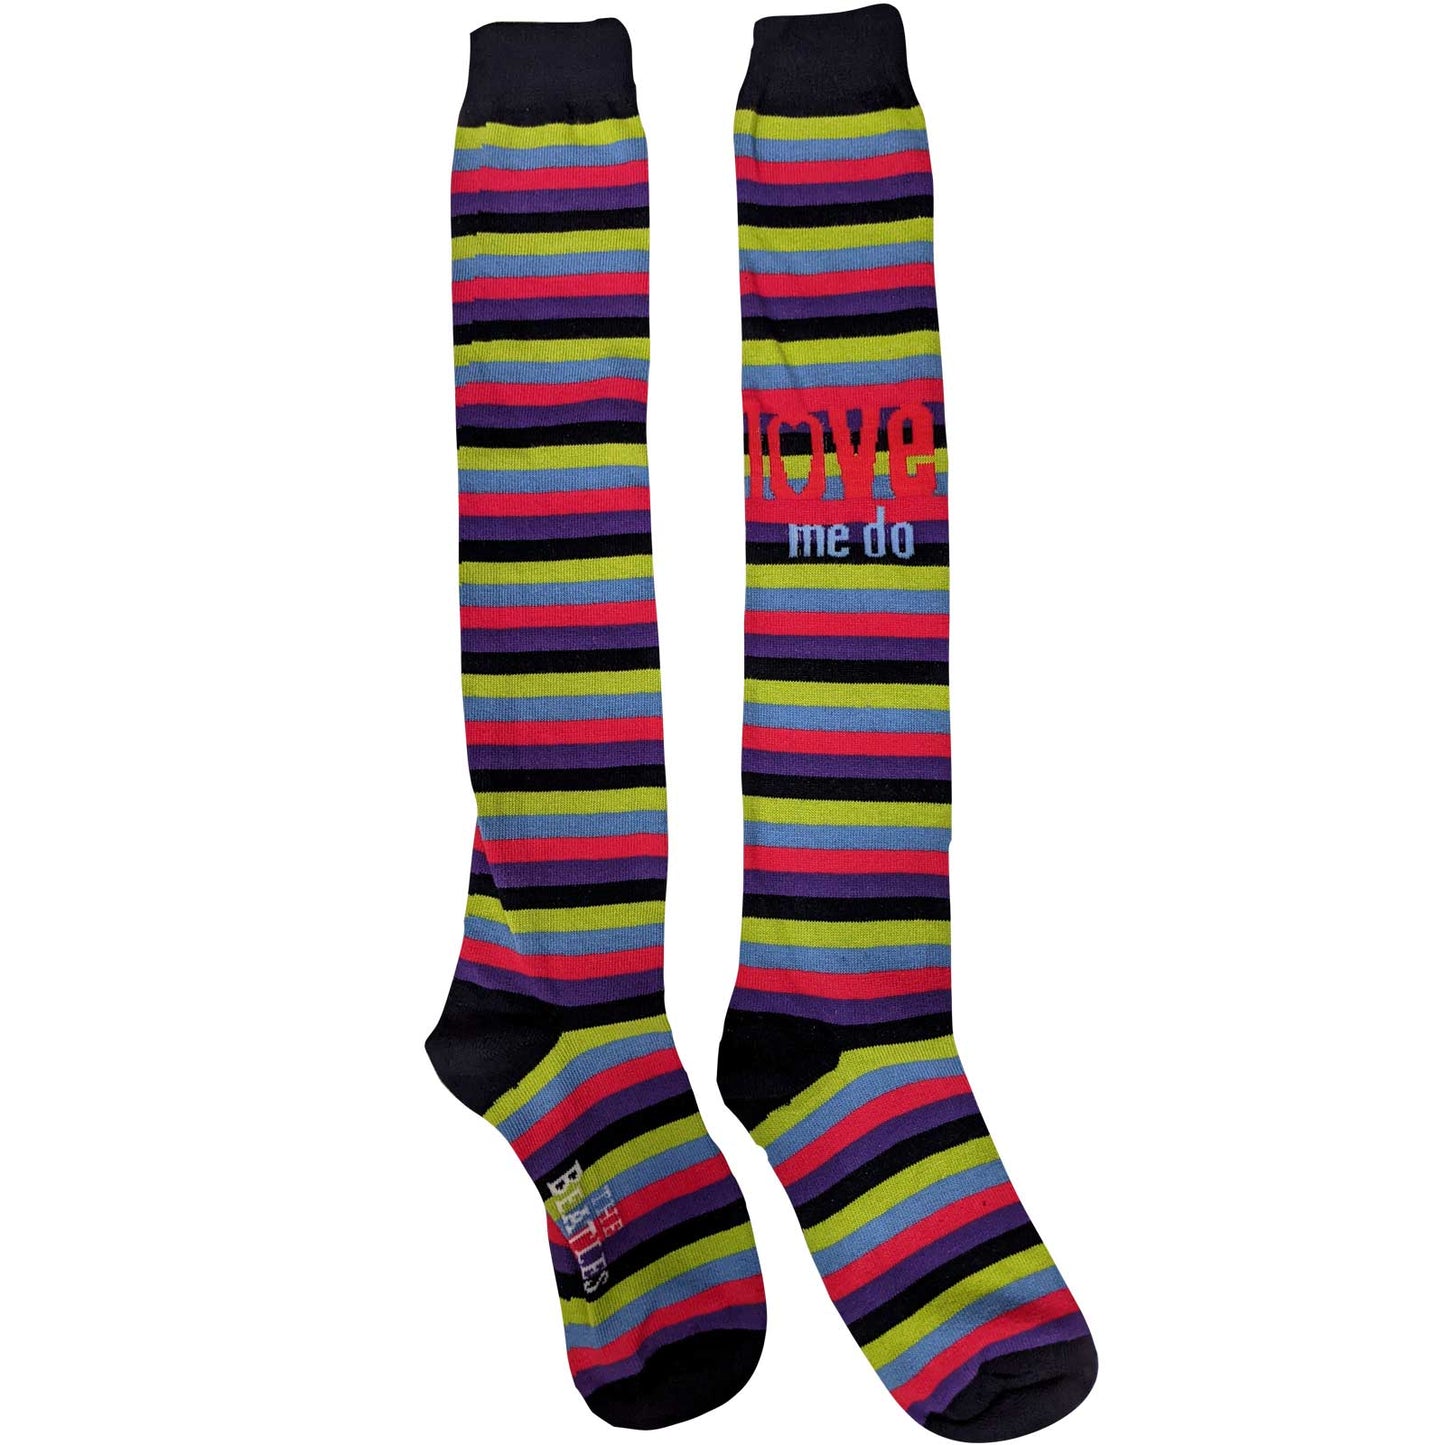 The Beatles Ladies Knee High Socks: Love Me Do (UK Size 4 - 7)